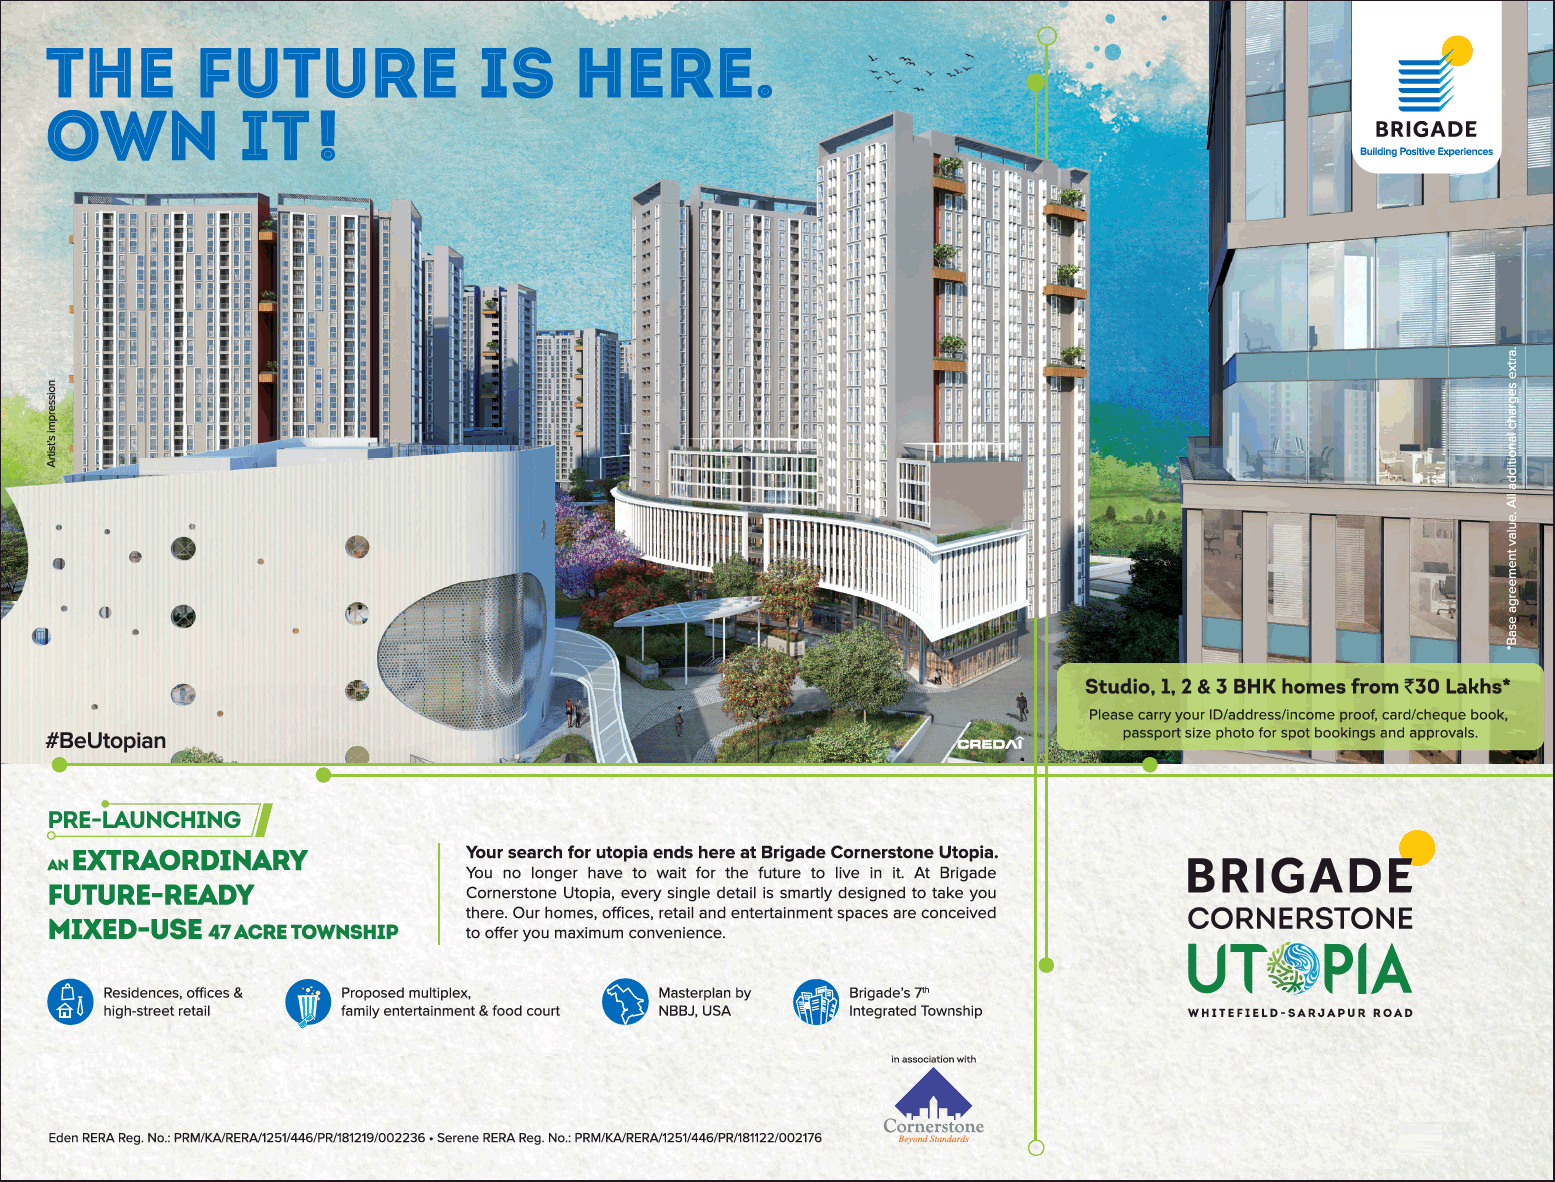 Brigade Cornerstone Utopia pre-launching an extraordinary future ready homes in Bangalore